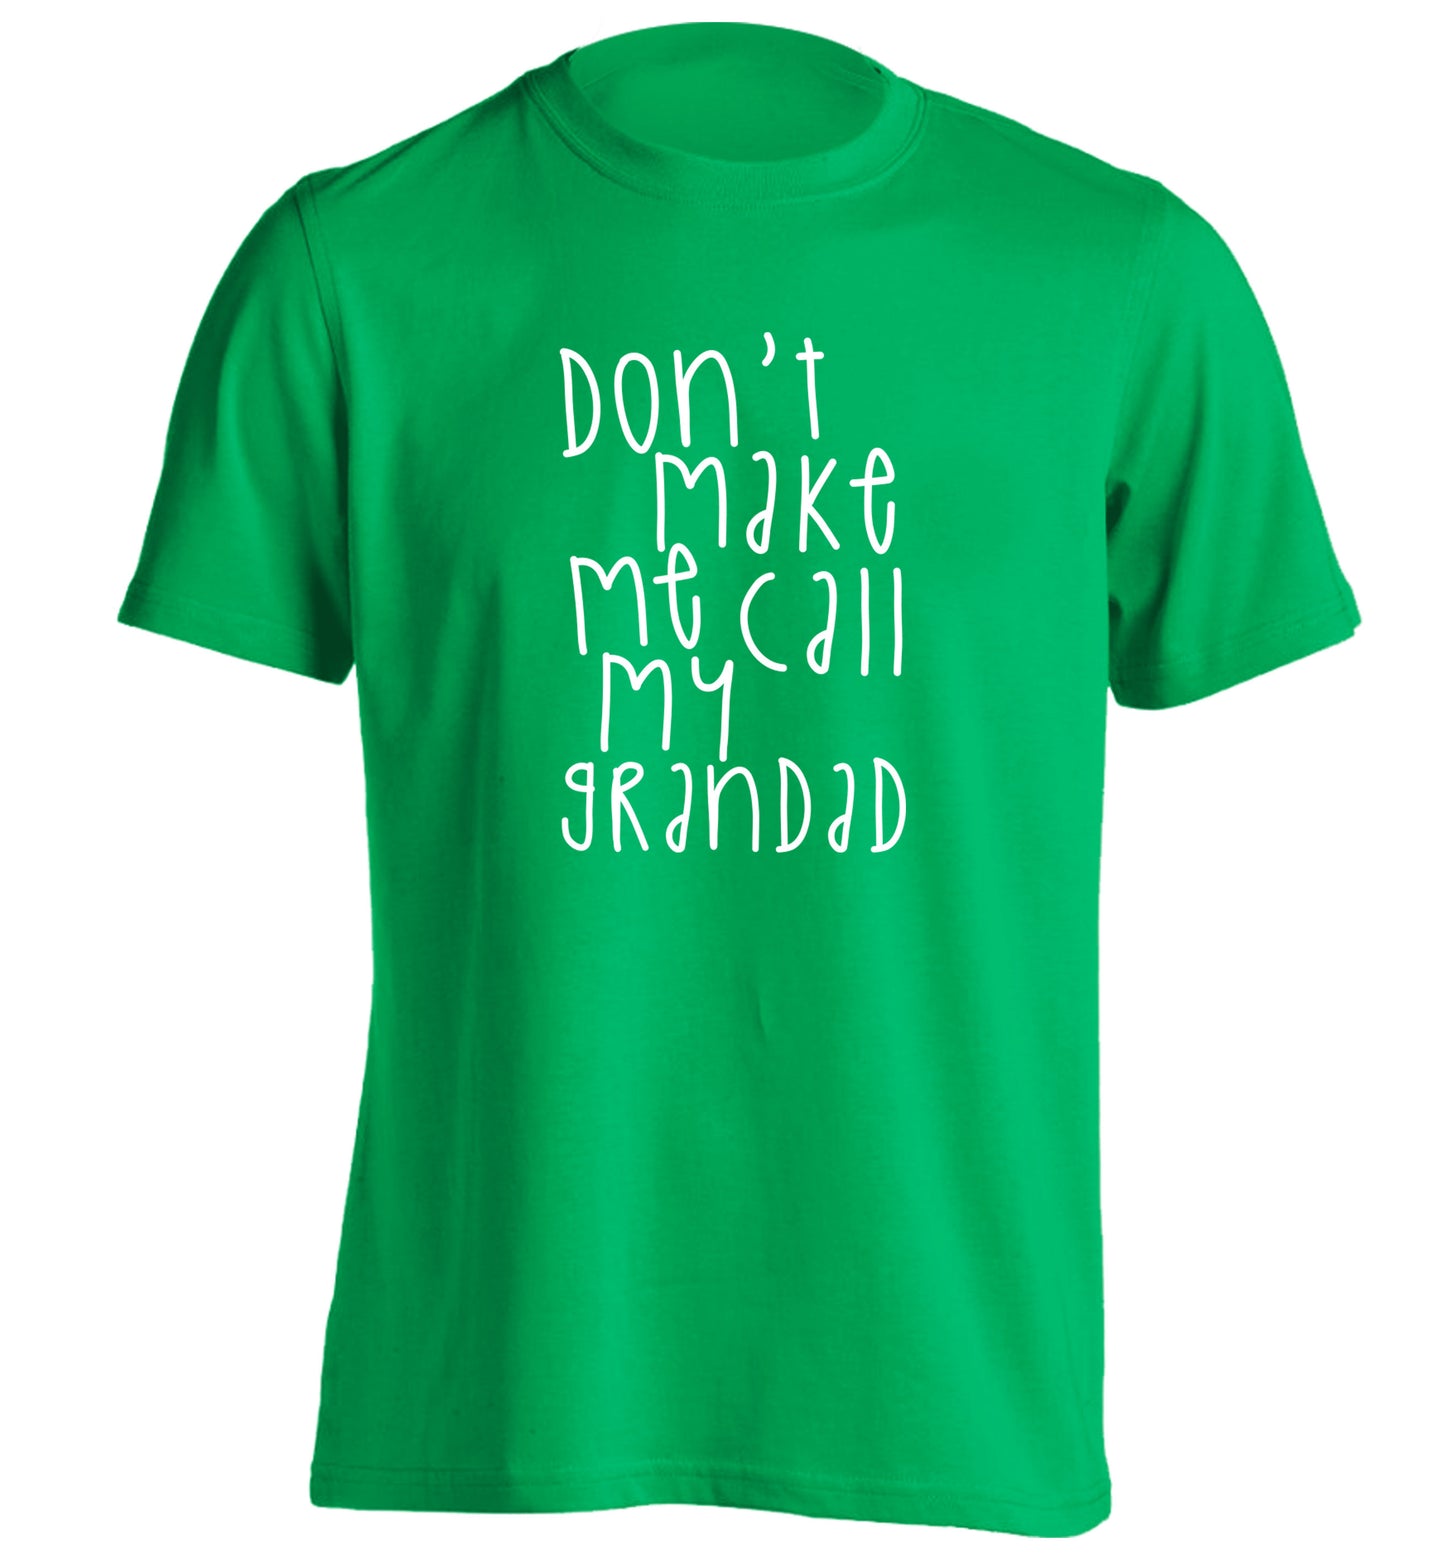 Don't make me call my grandad adults unisex green Tshirt 2XL